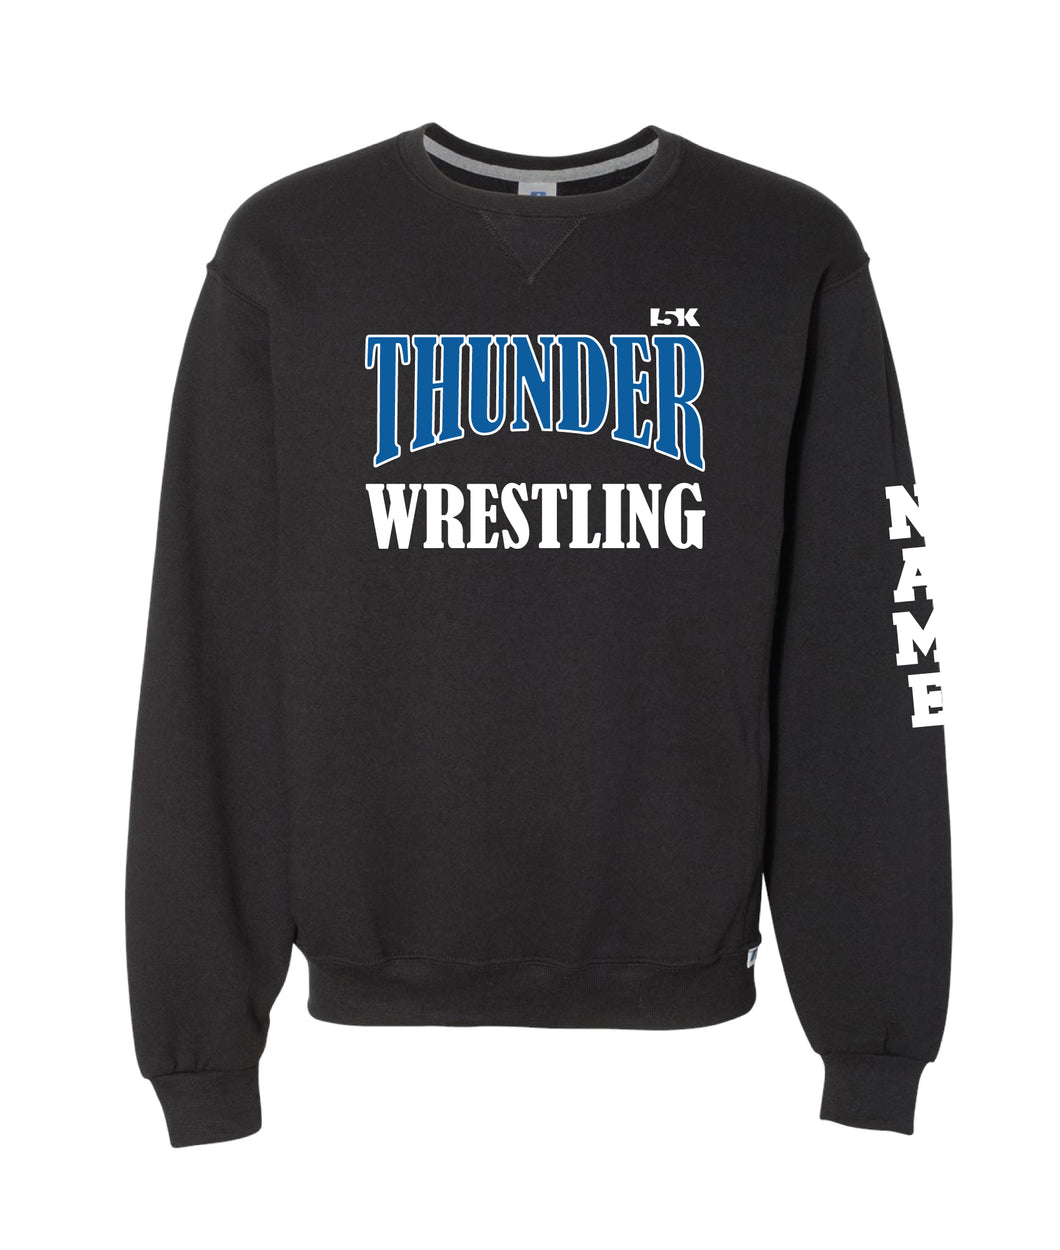 Thunder Wrestling Club Russell Athletic Cotton Crewneck Sweatshirt - Black - 5KounT